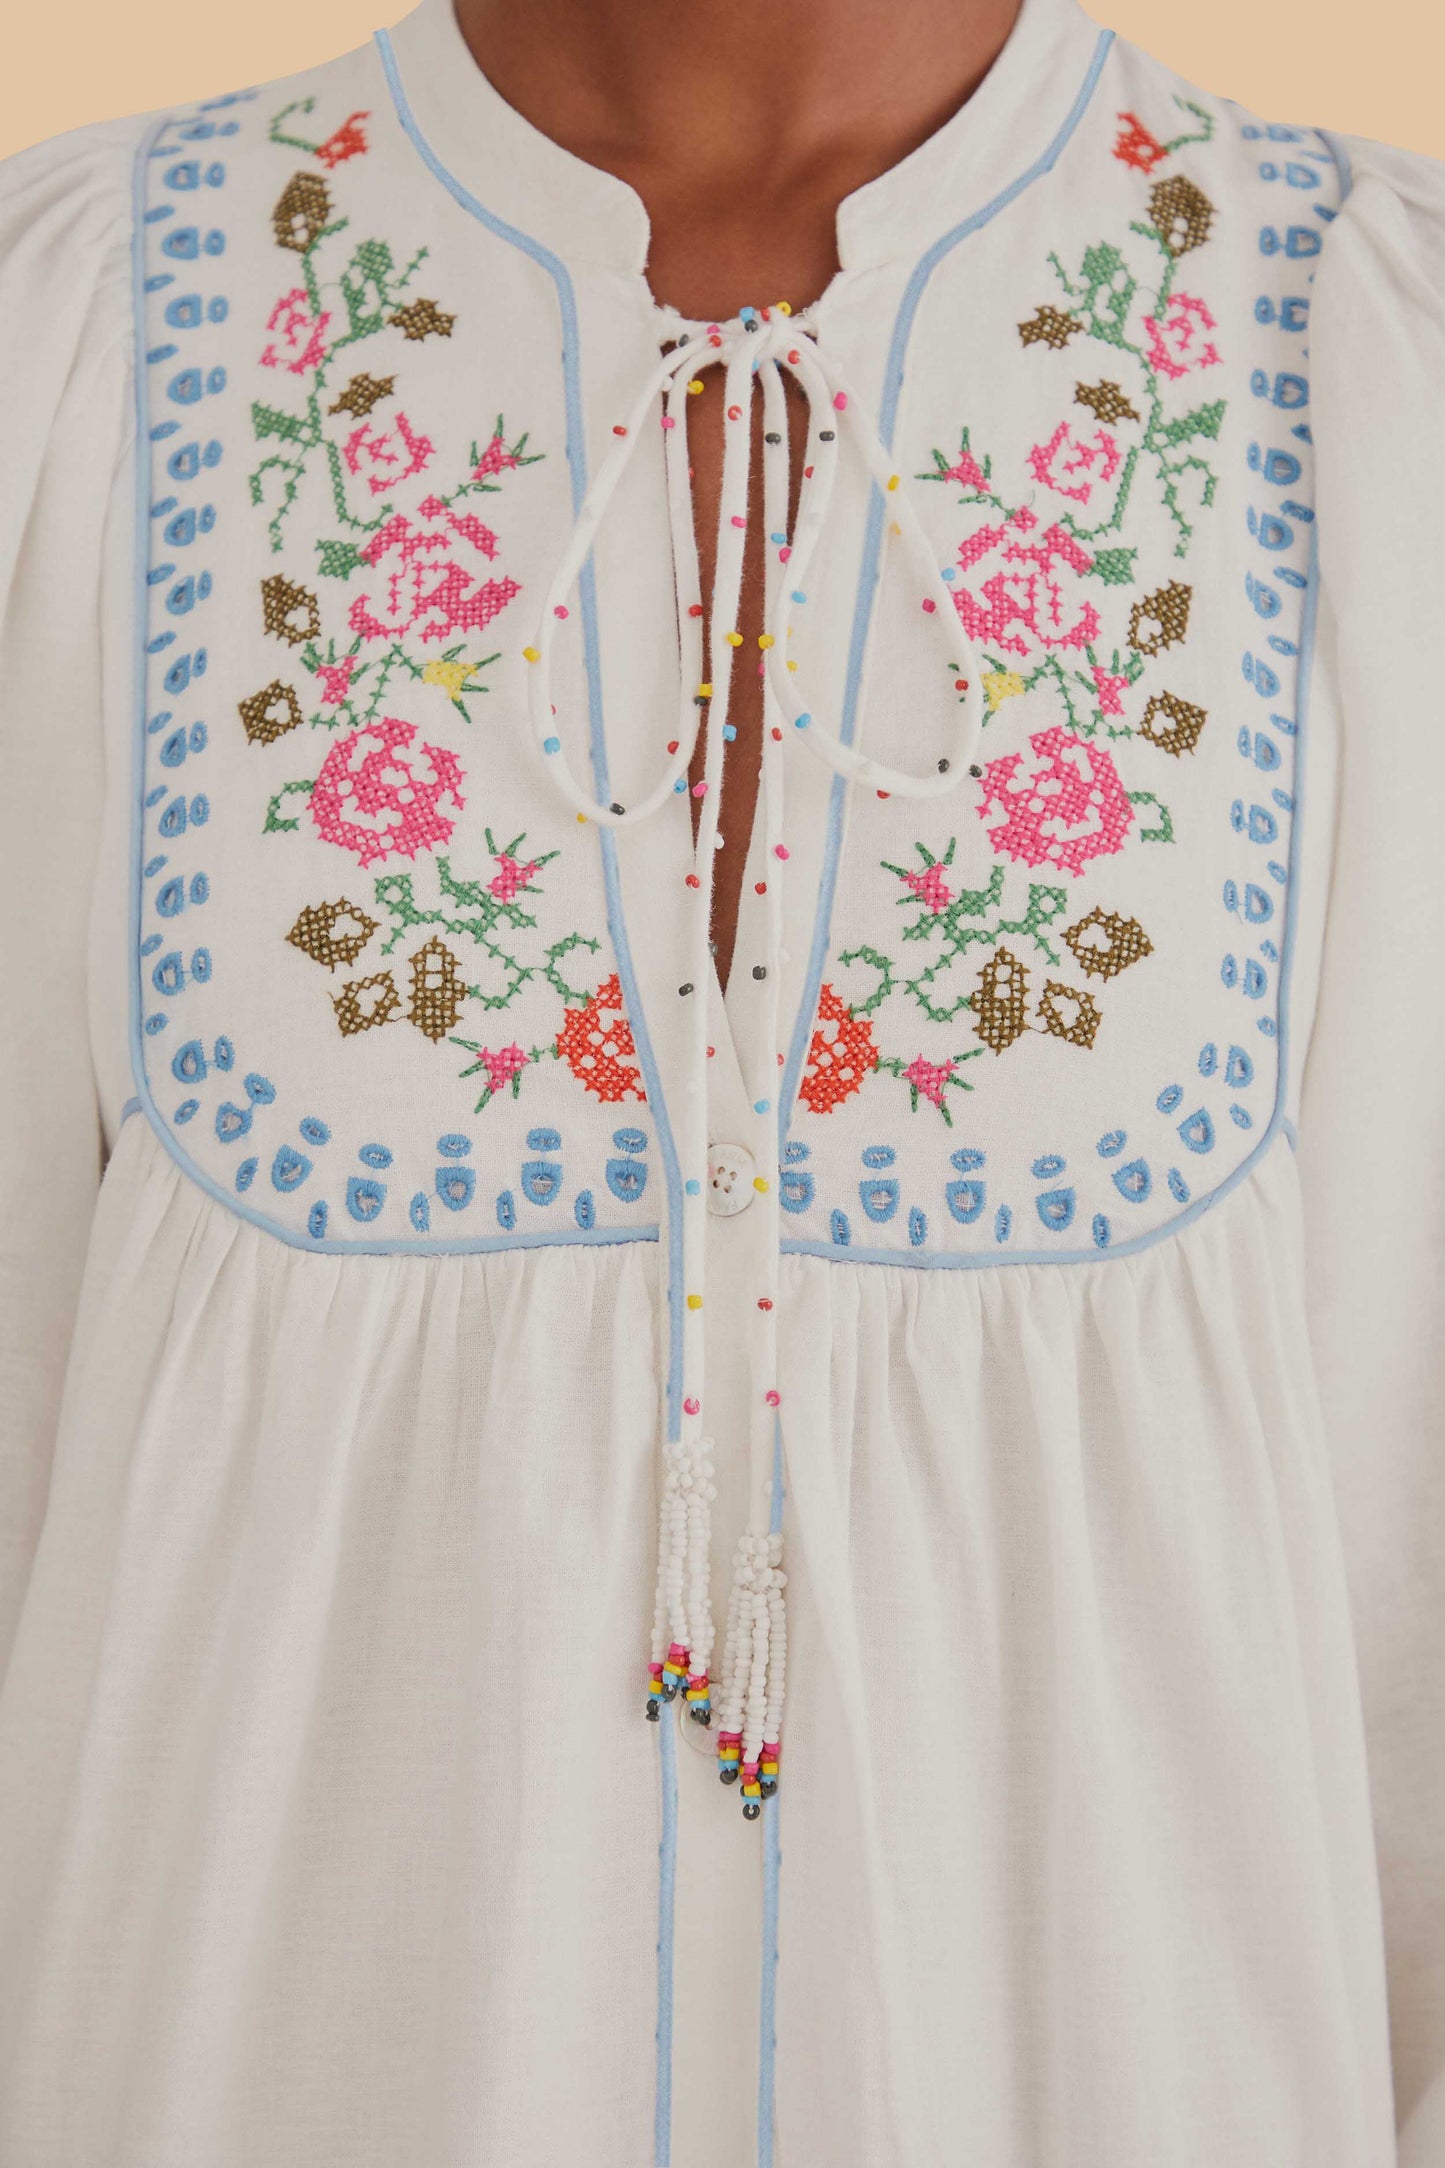 Off-White Embroidered Midi Dress